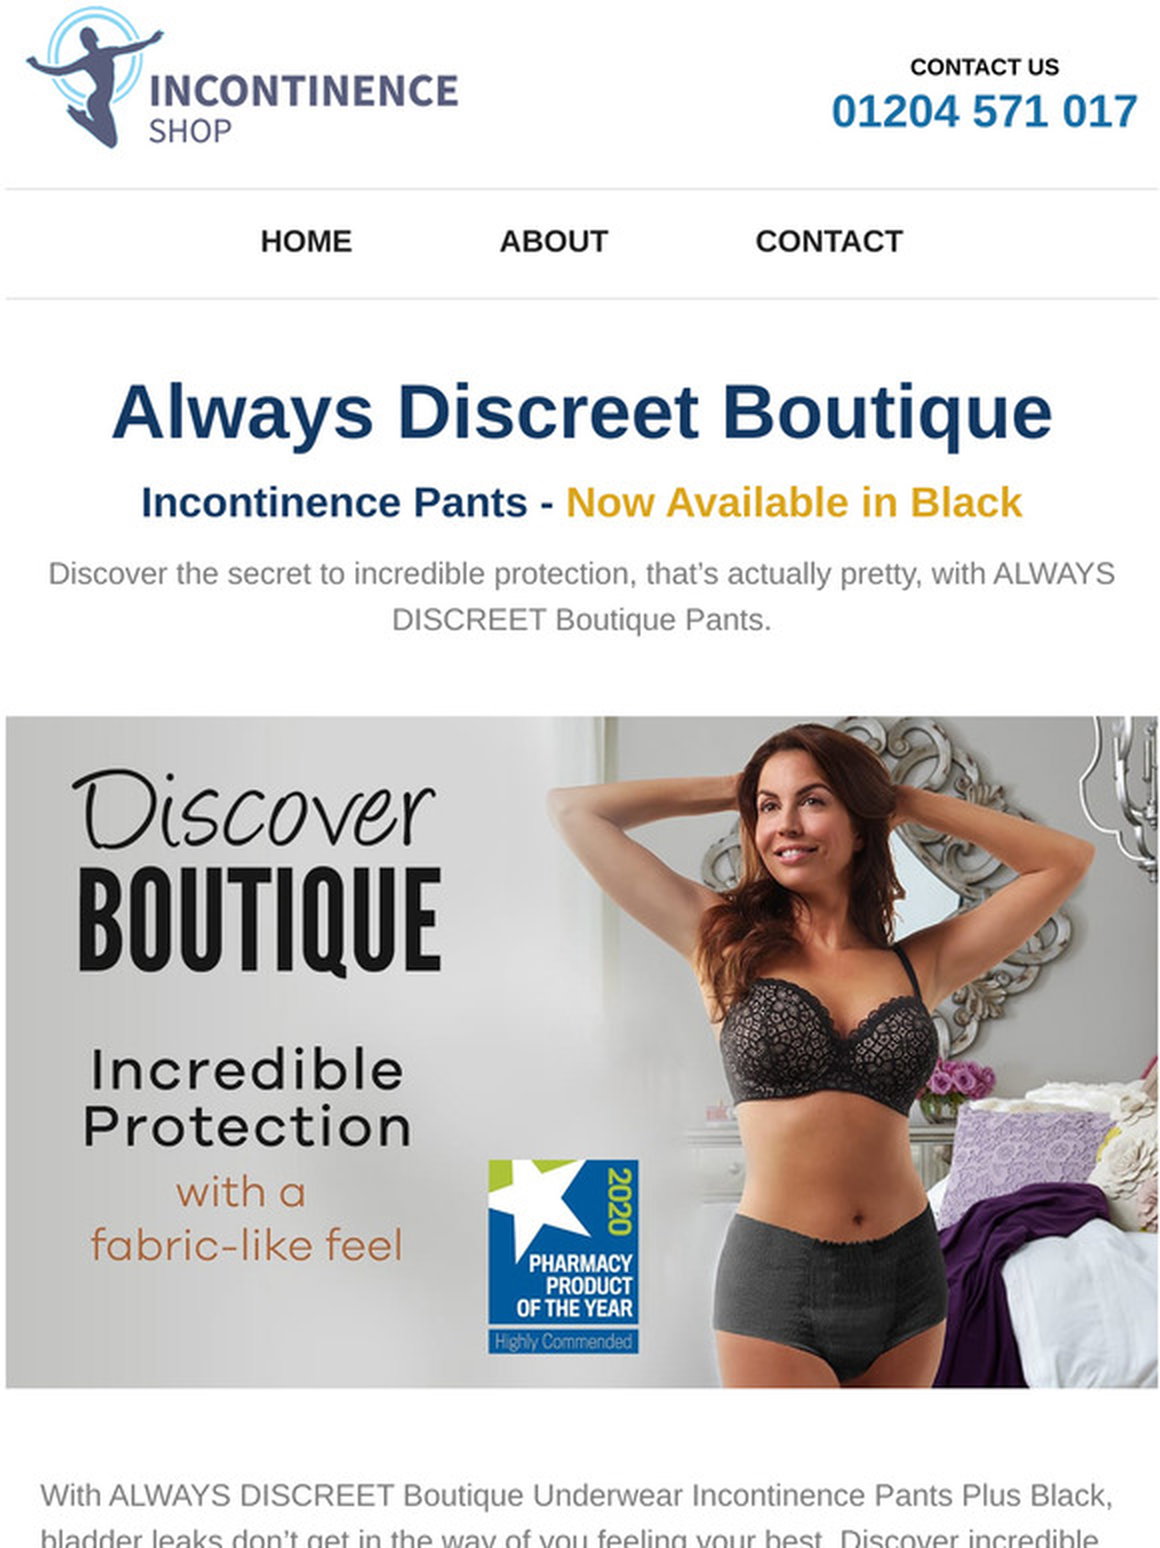 incontinenceshop.com: Incontinence Shop - New Always Discreet